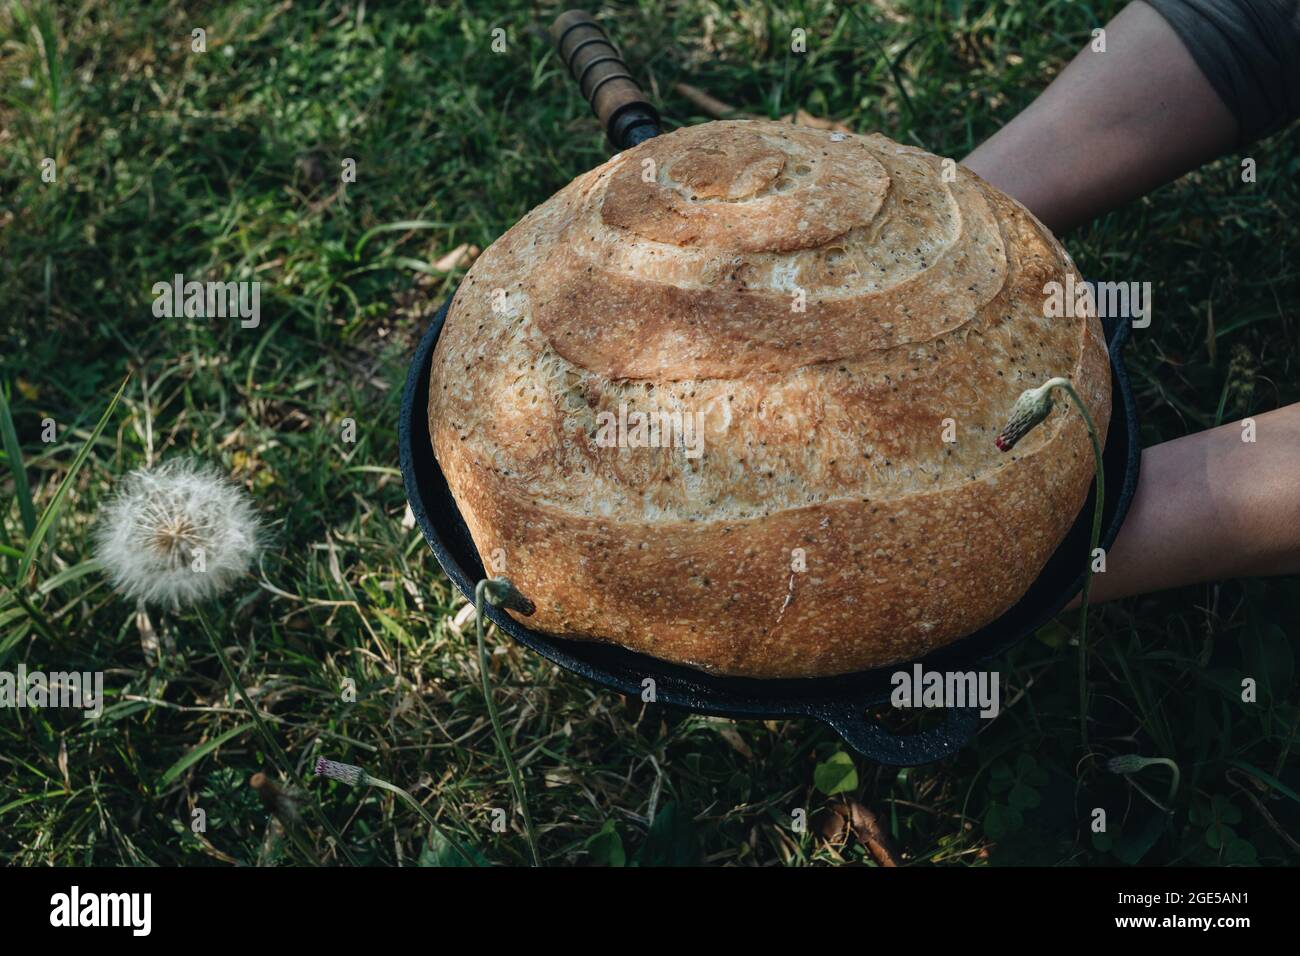 Homemade crusty artisan sourdough bread in the backyard, natural background Stock Photo